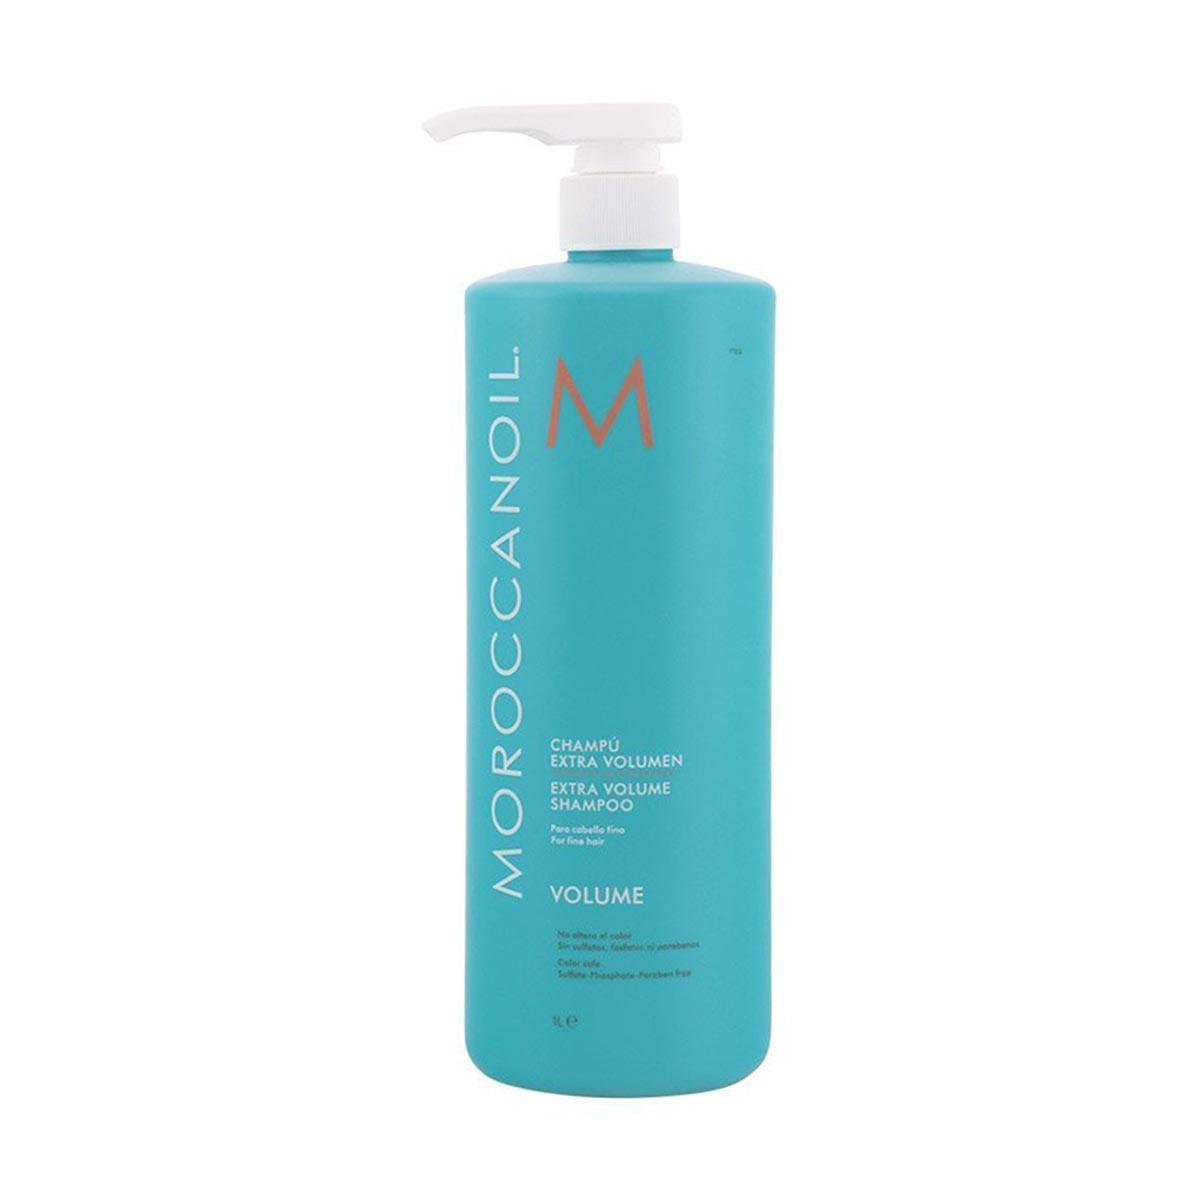 moroccanoil-shampooing-volume-extra-1000ml